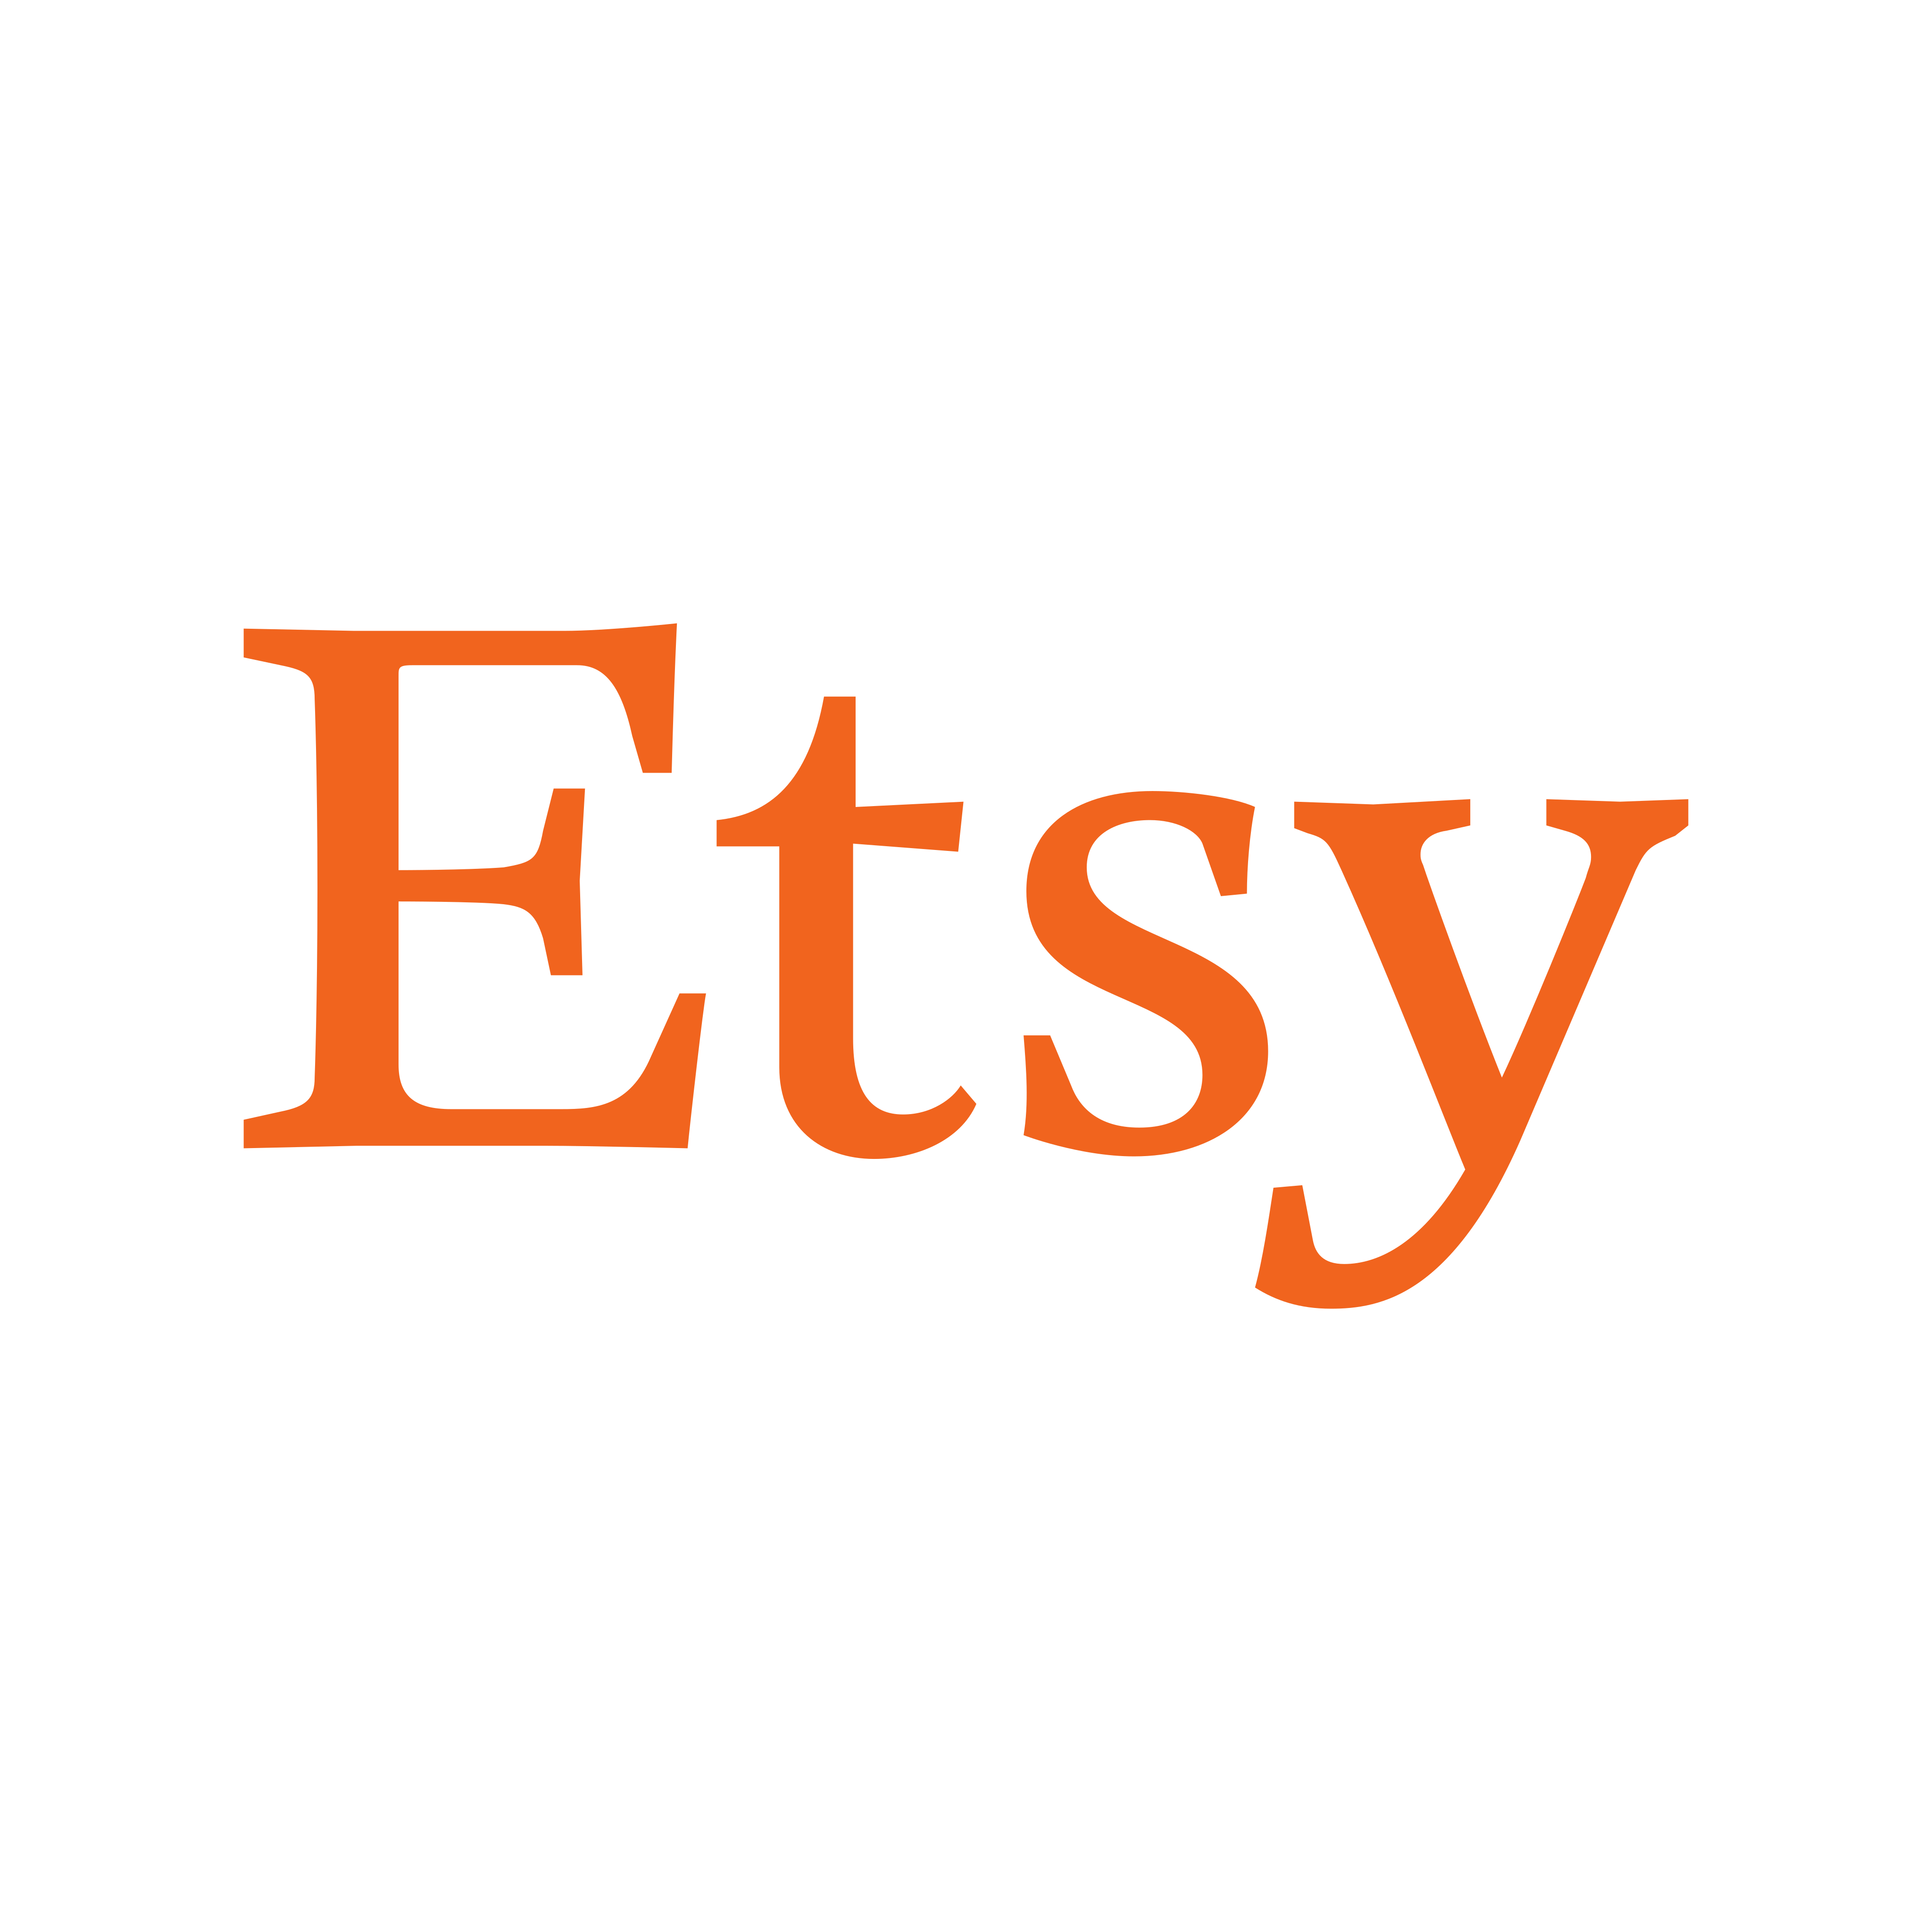 Etsy Logo PNG.